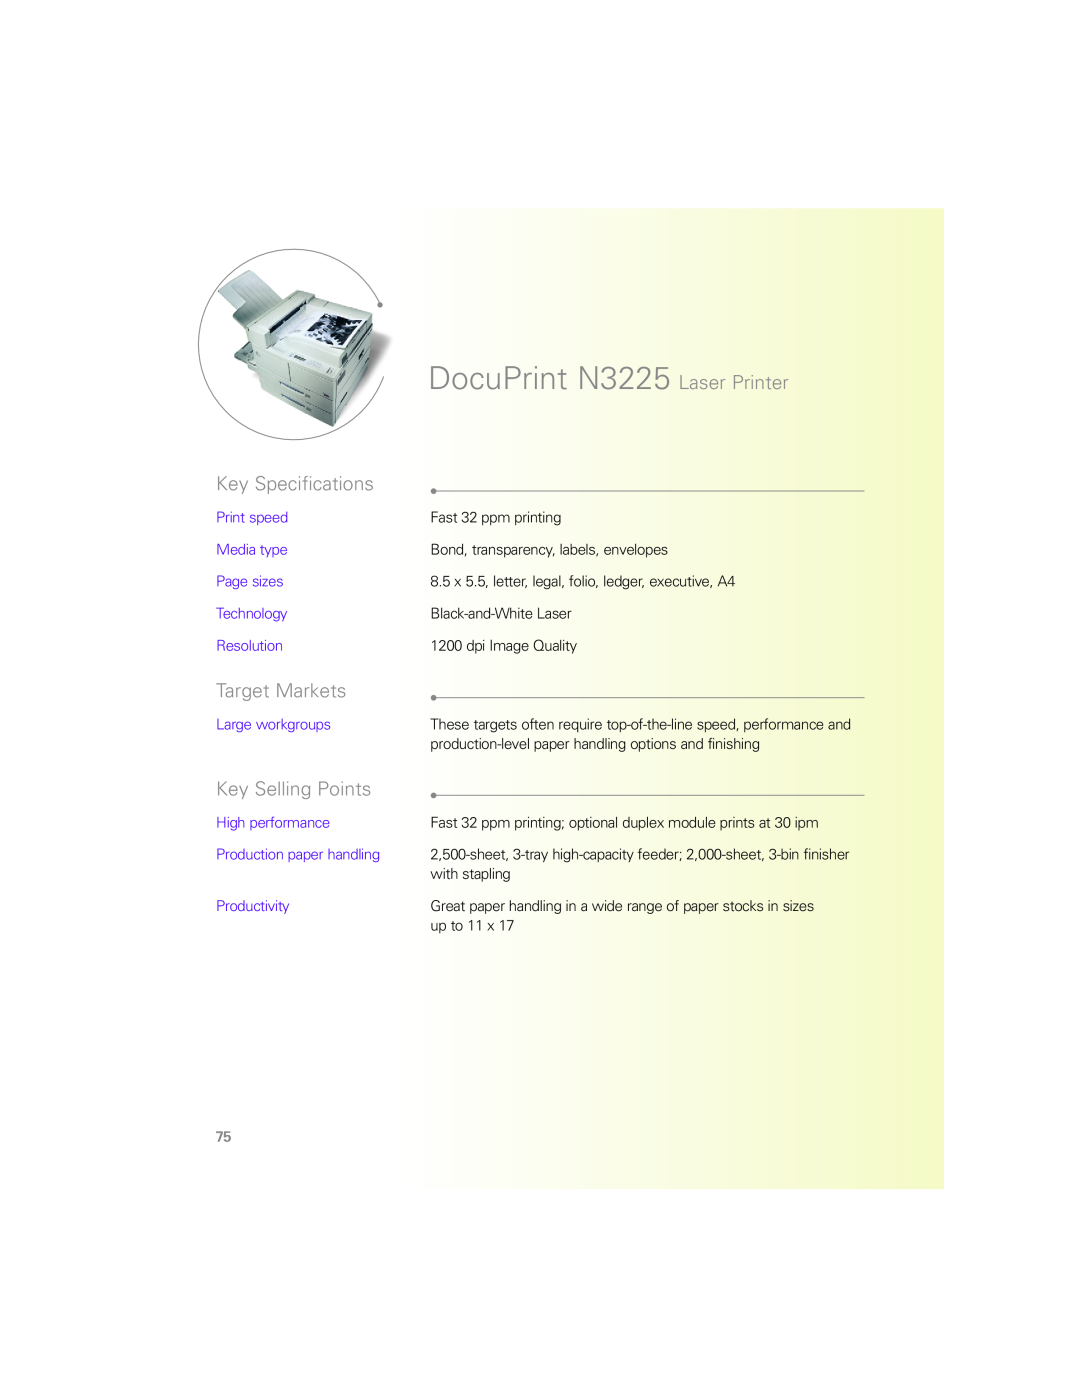 Xerox N Series manual DocuPrint N3225 Laser Printer, Key Specifications, Target Markets, Key Selling Points, with stapling 